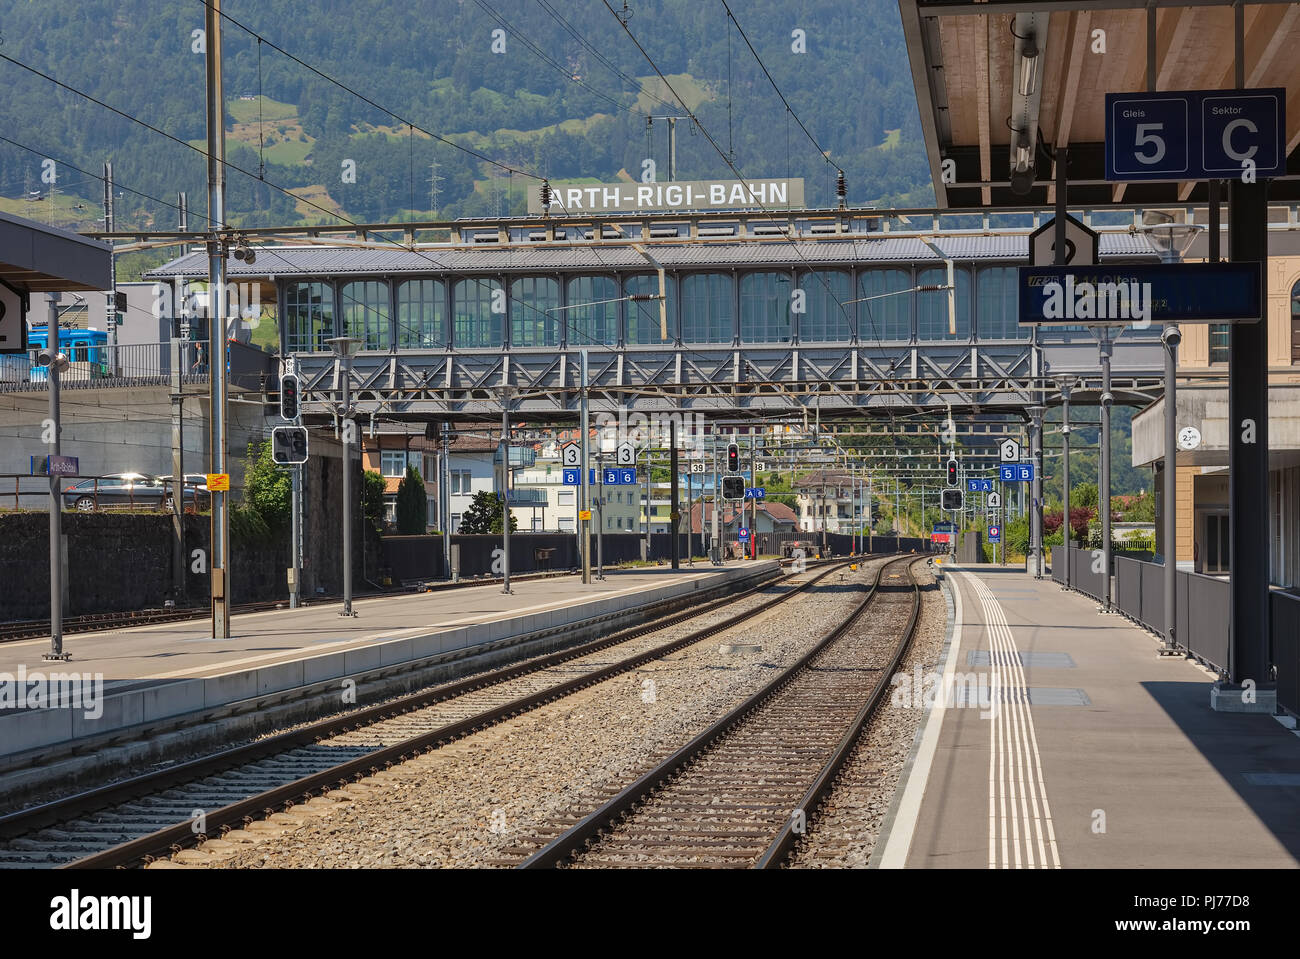 Arth-Rigi-Bahn railway station in Switzerland, view from the plaform of the Arth-Goldau railway station Stock Photo